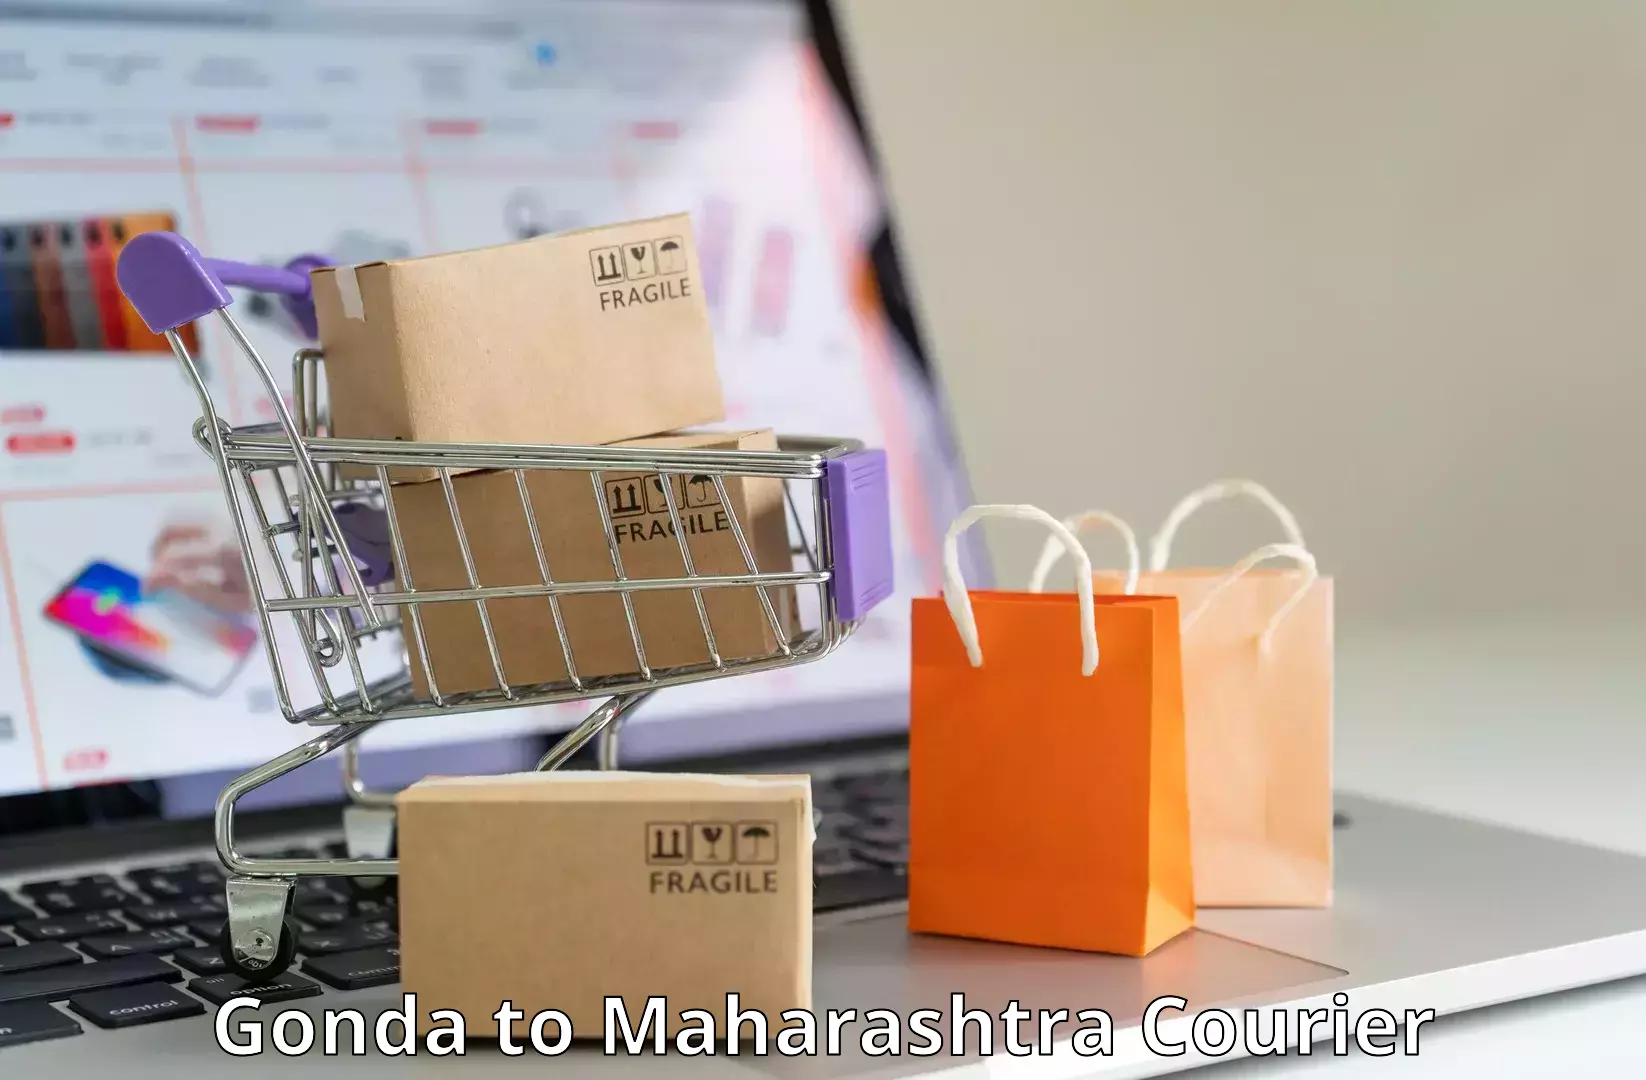 Cash on delivery service in Gonda to Akkalkuva